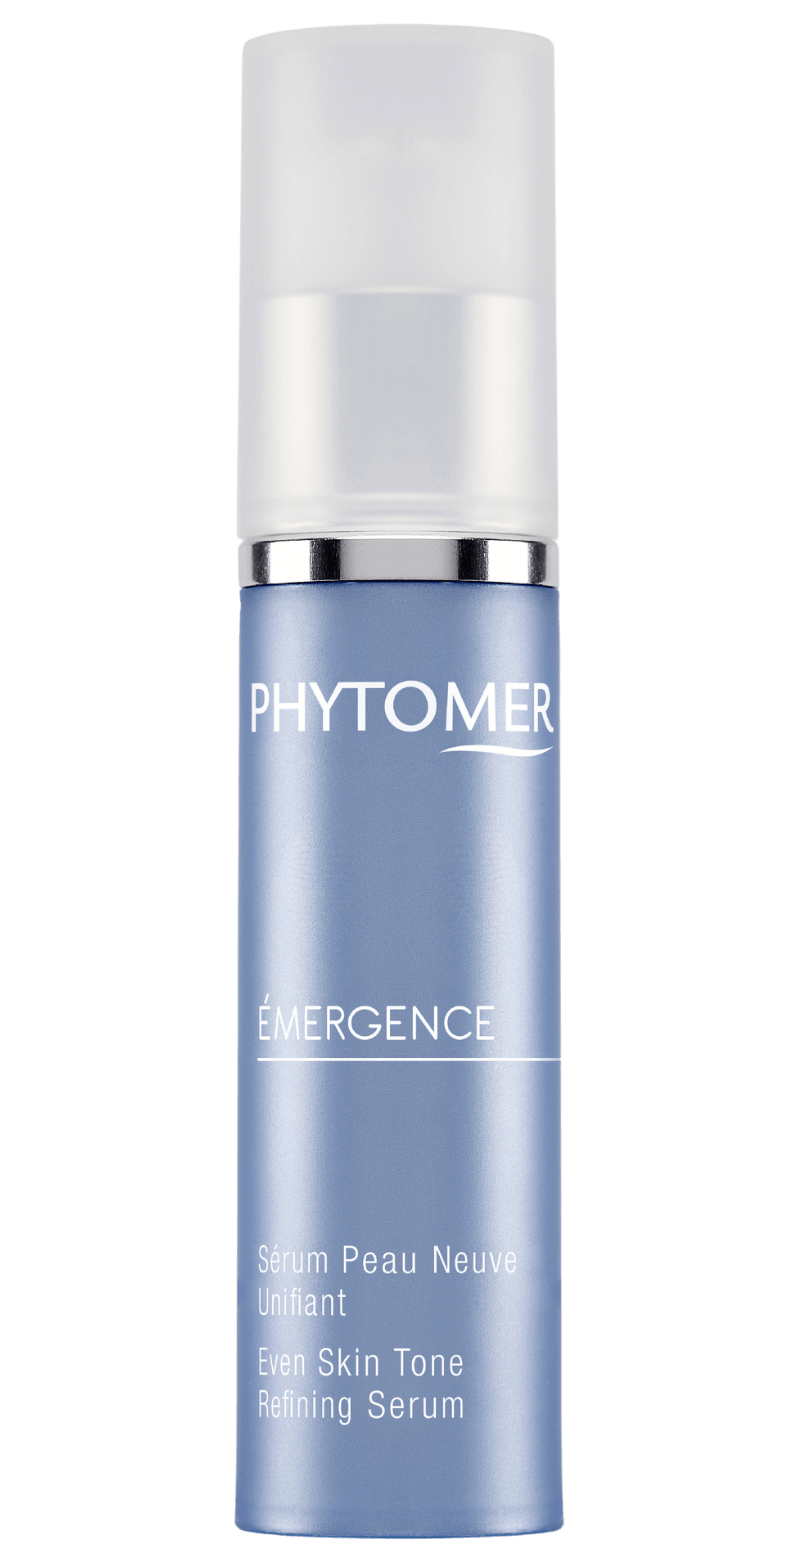 &#39;s Phytomer EMERGENCE Even Skin Tone Refining Serum - Bellini&#39;s Skin and Parfumerie 